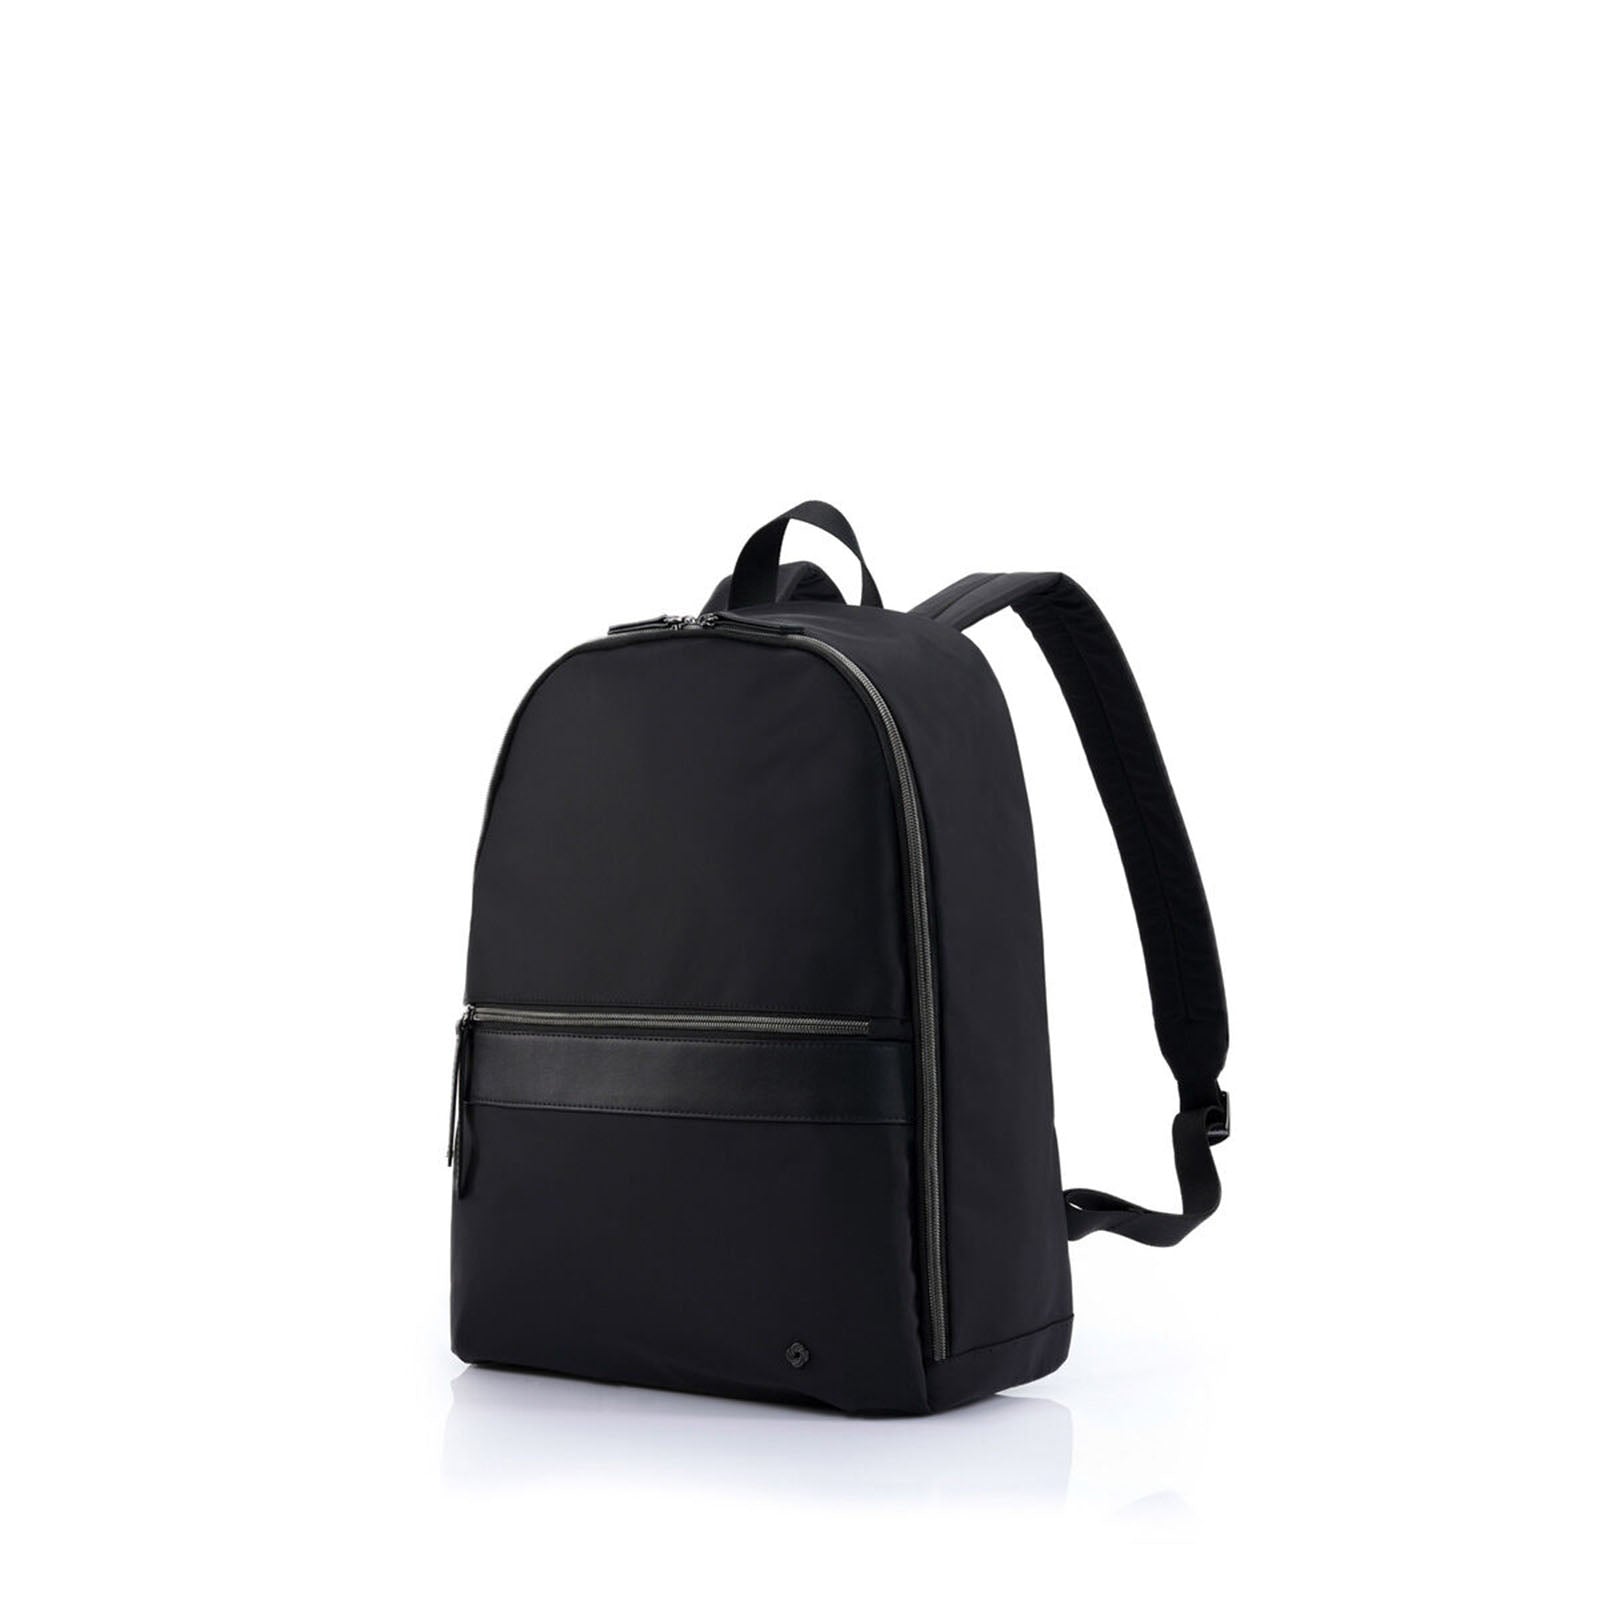 Samsonite-Mobile-Solutions-Backpack-Black-Front-Angle